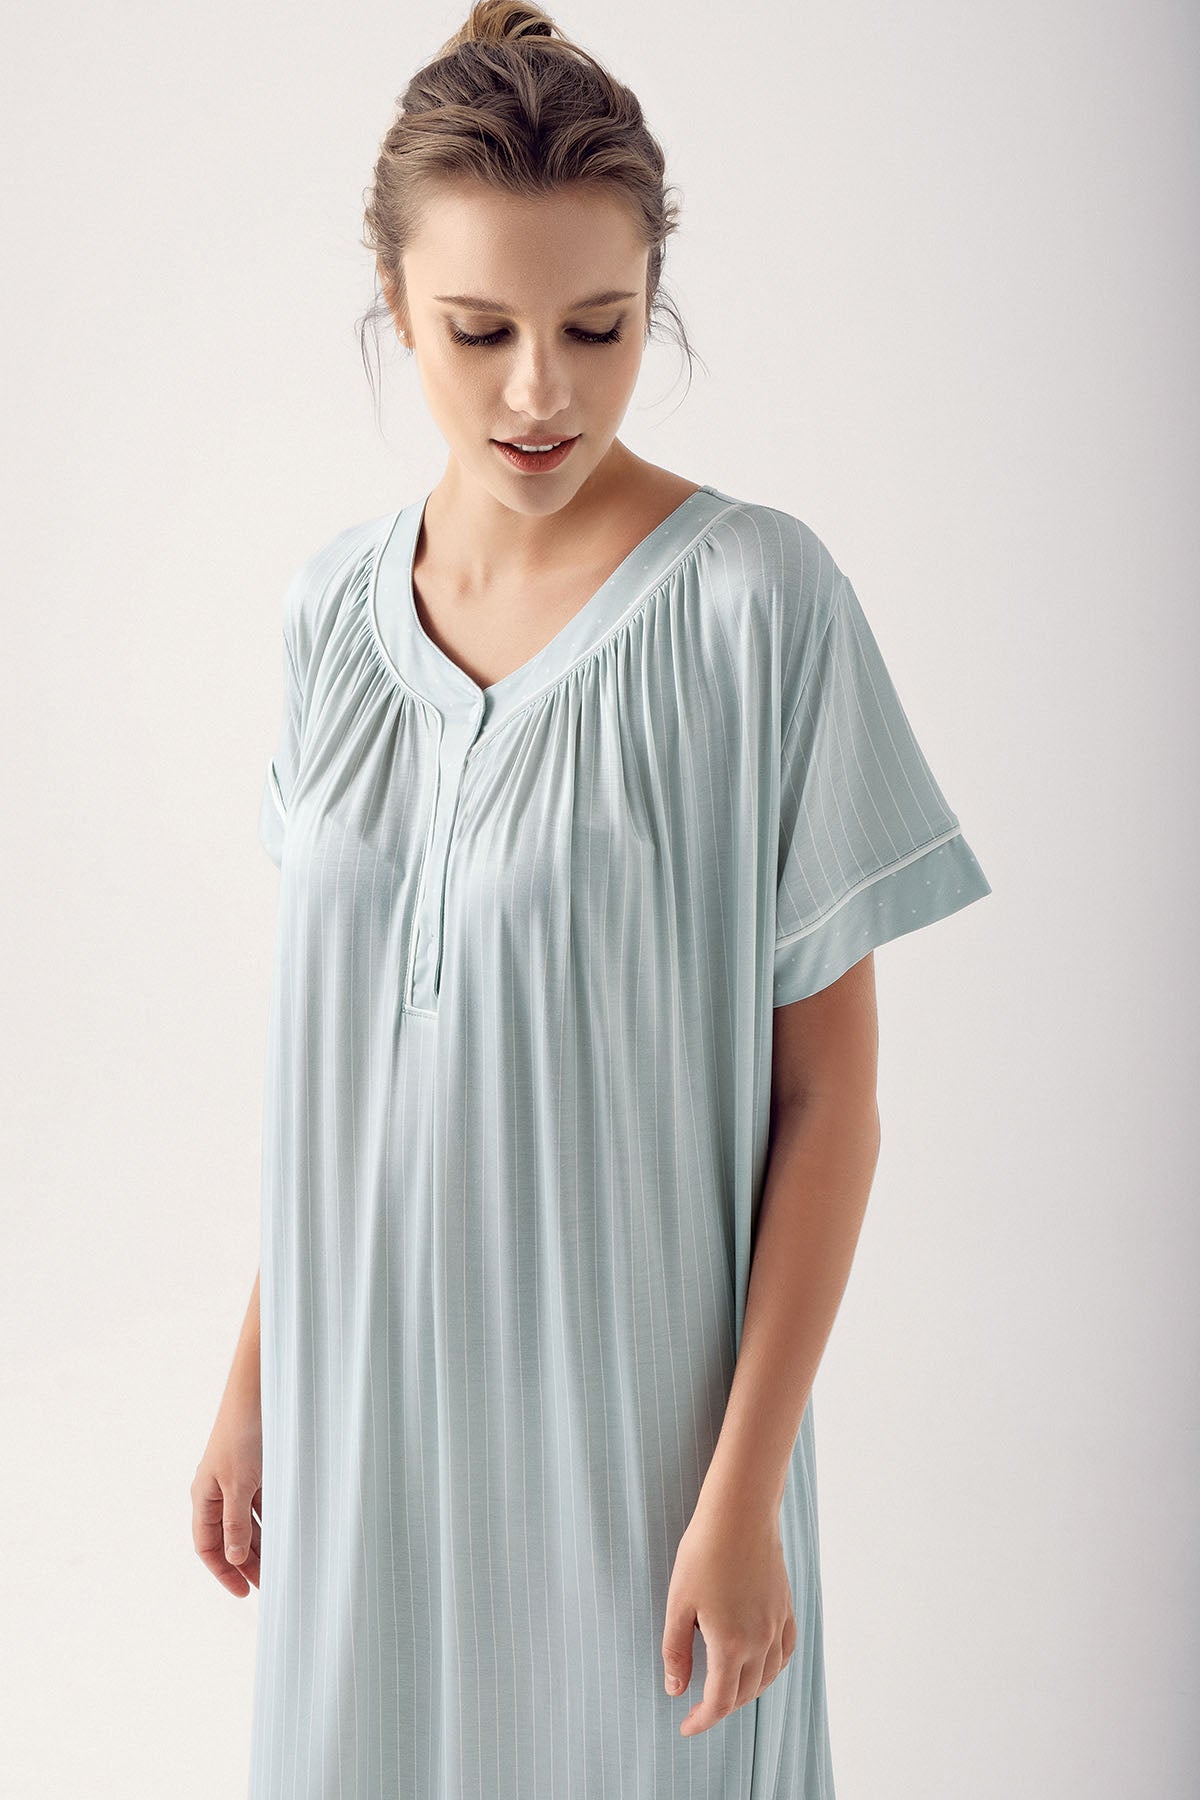 Shopymommy 14115 Striped Maternity & Nursing Nightgown Green